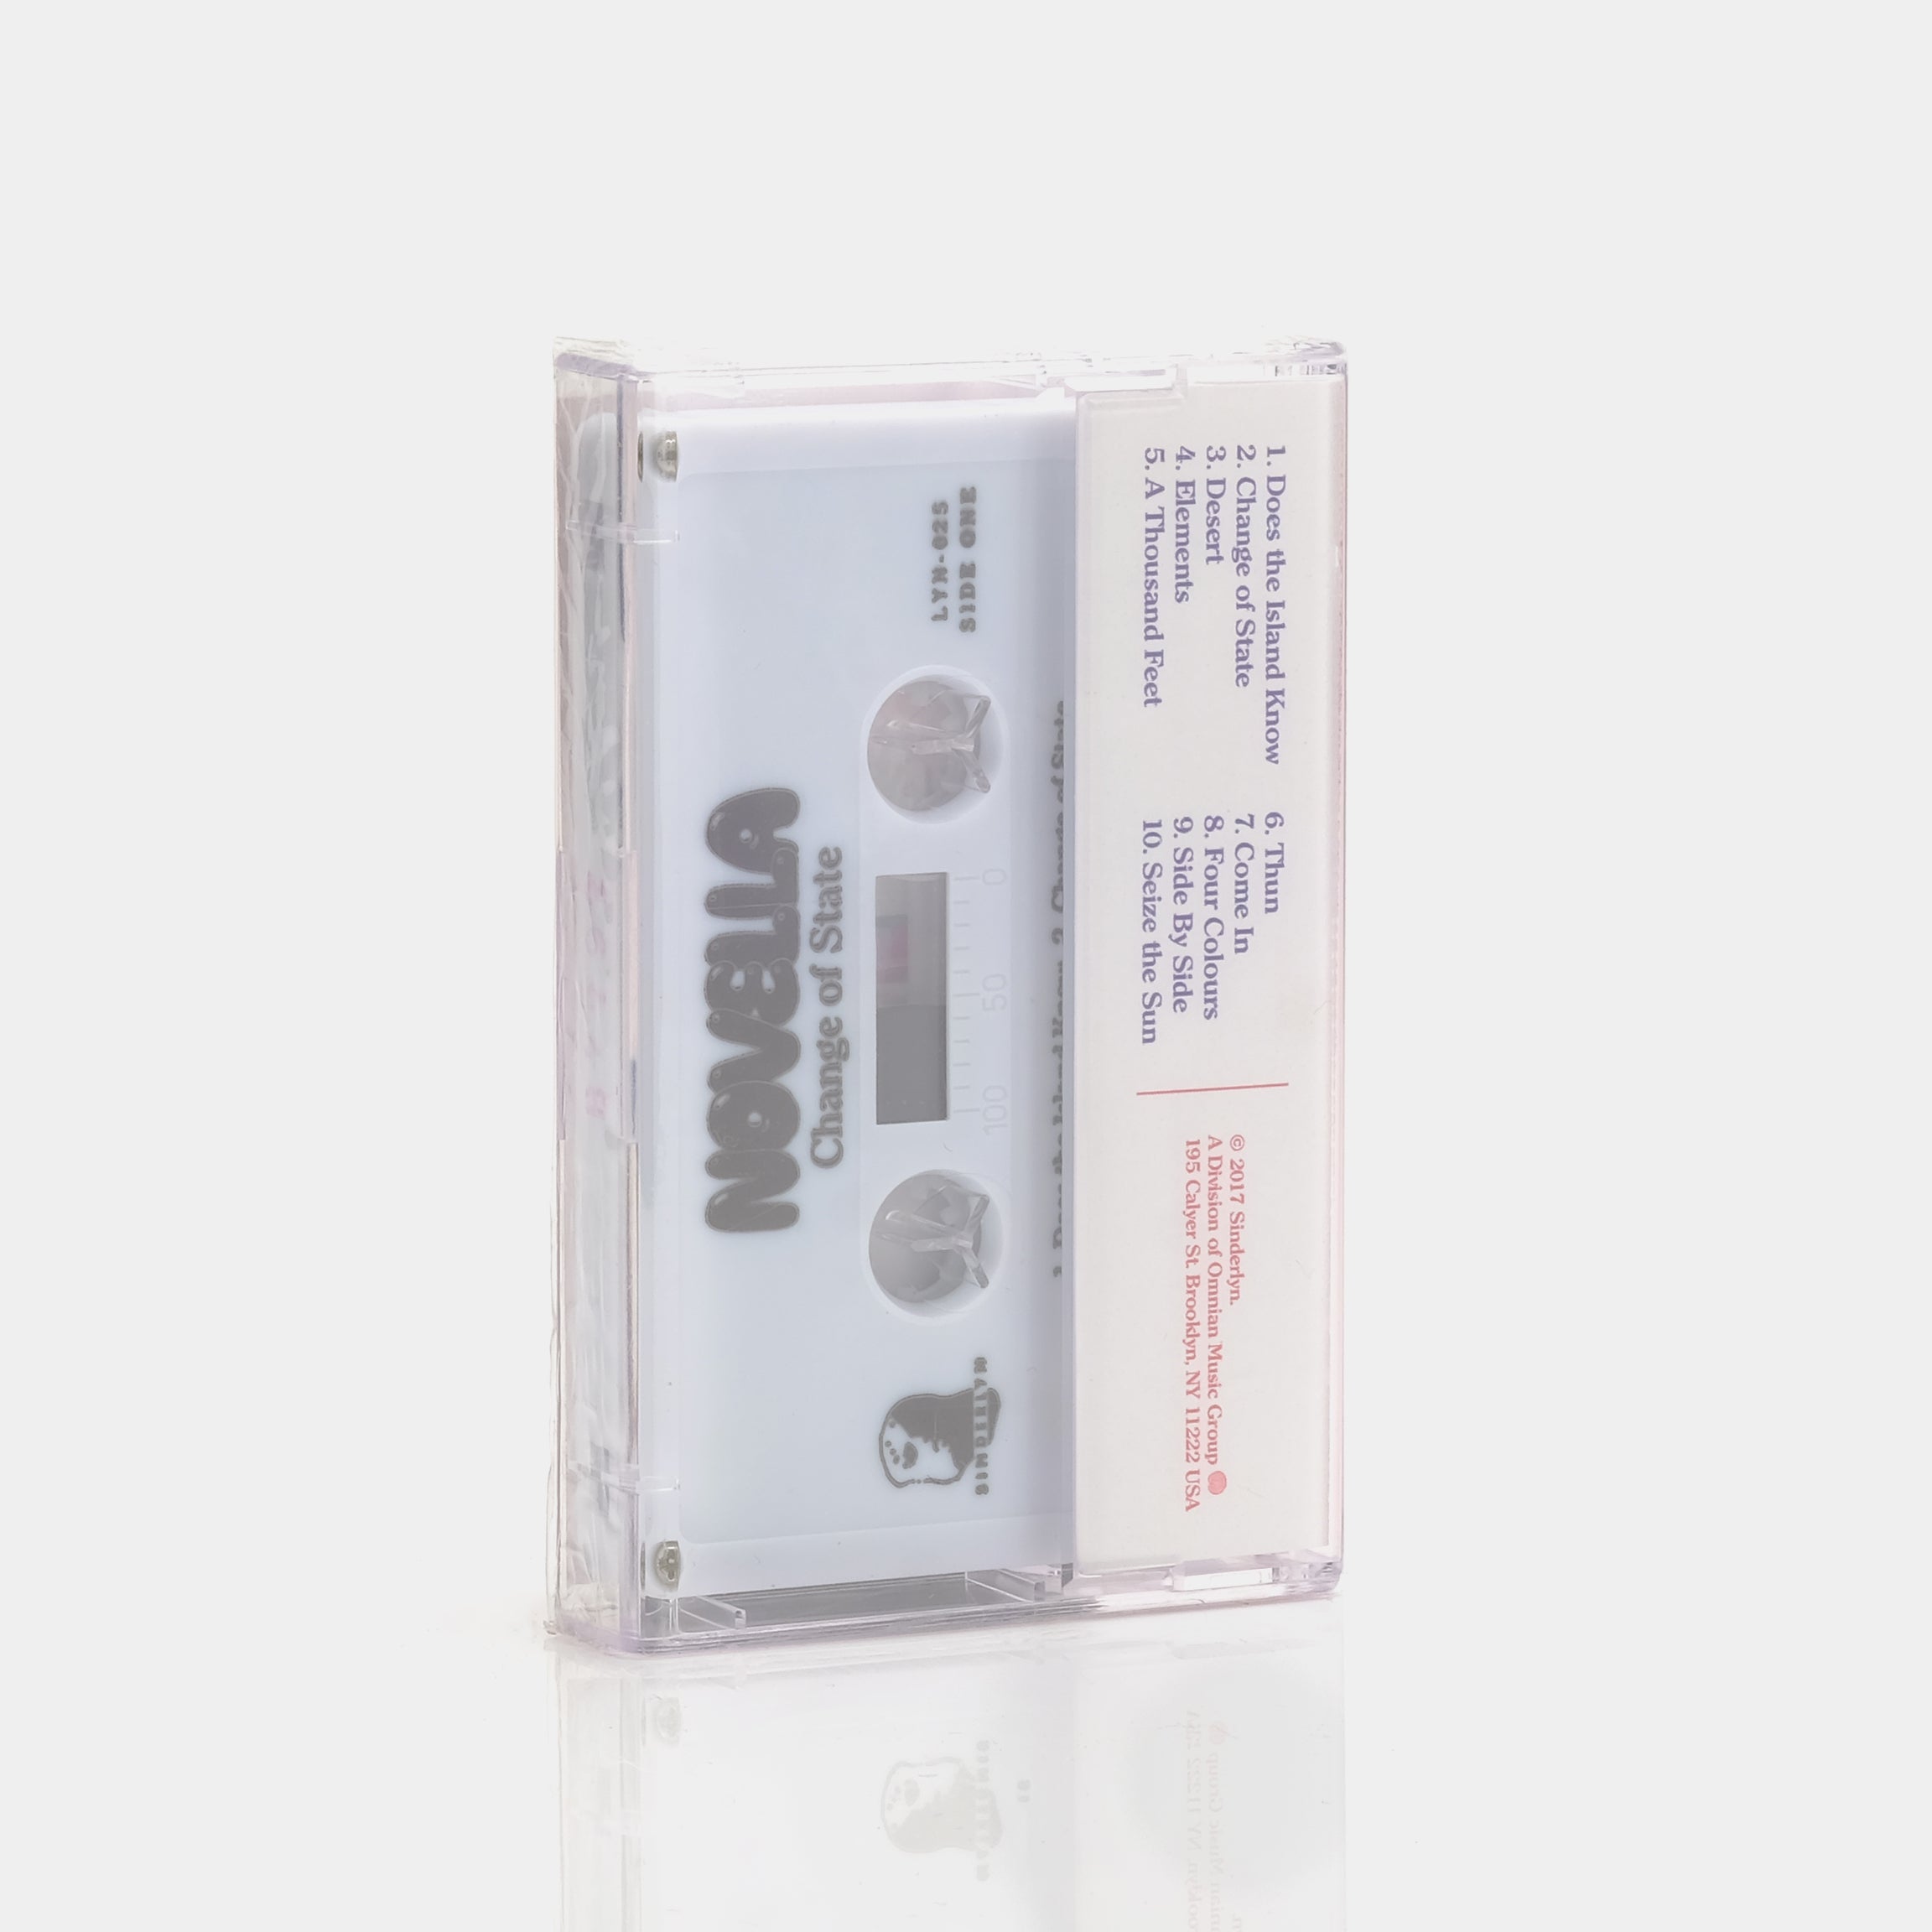 Novella - Change Of State Cassette Tape